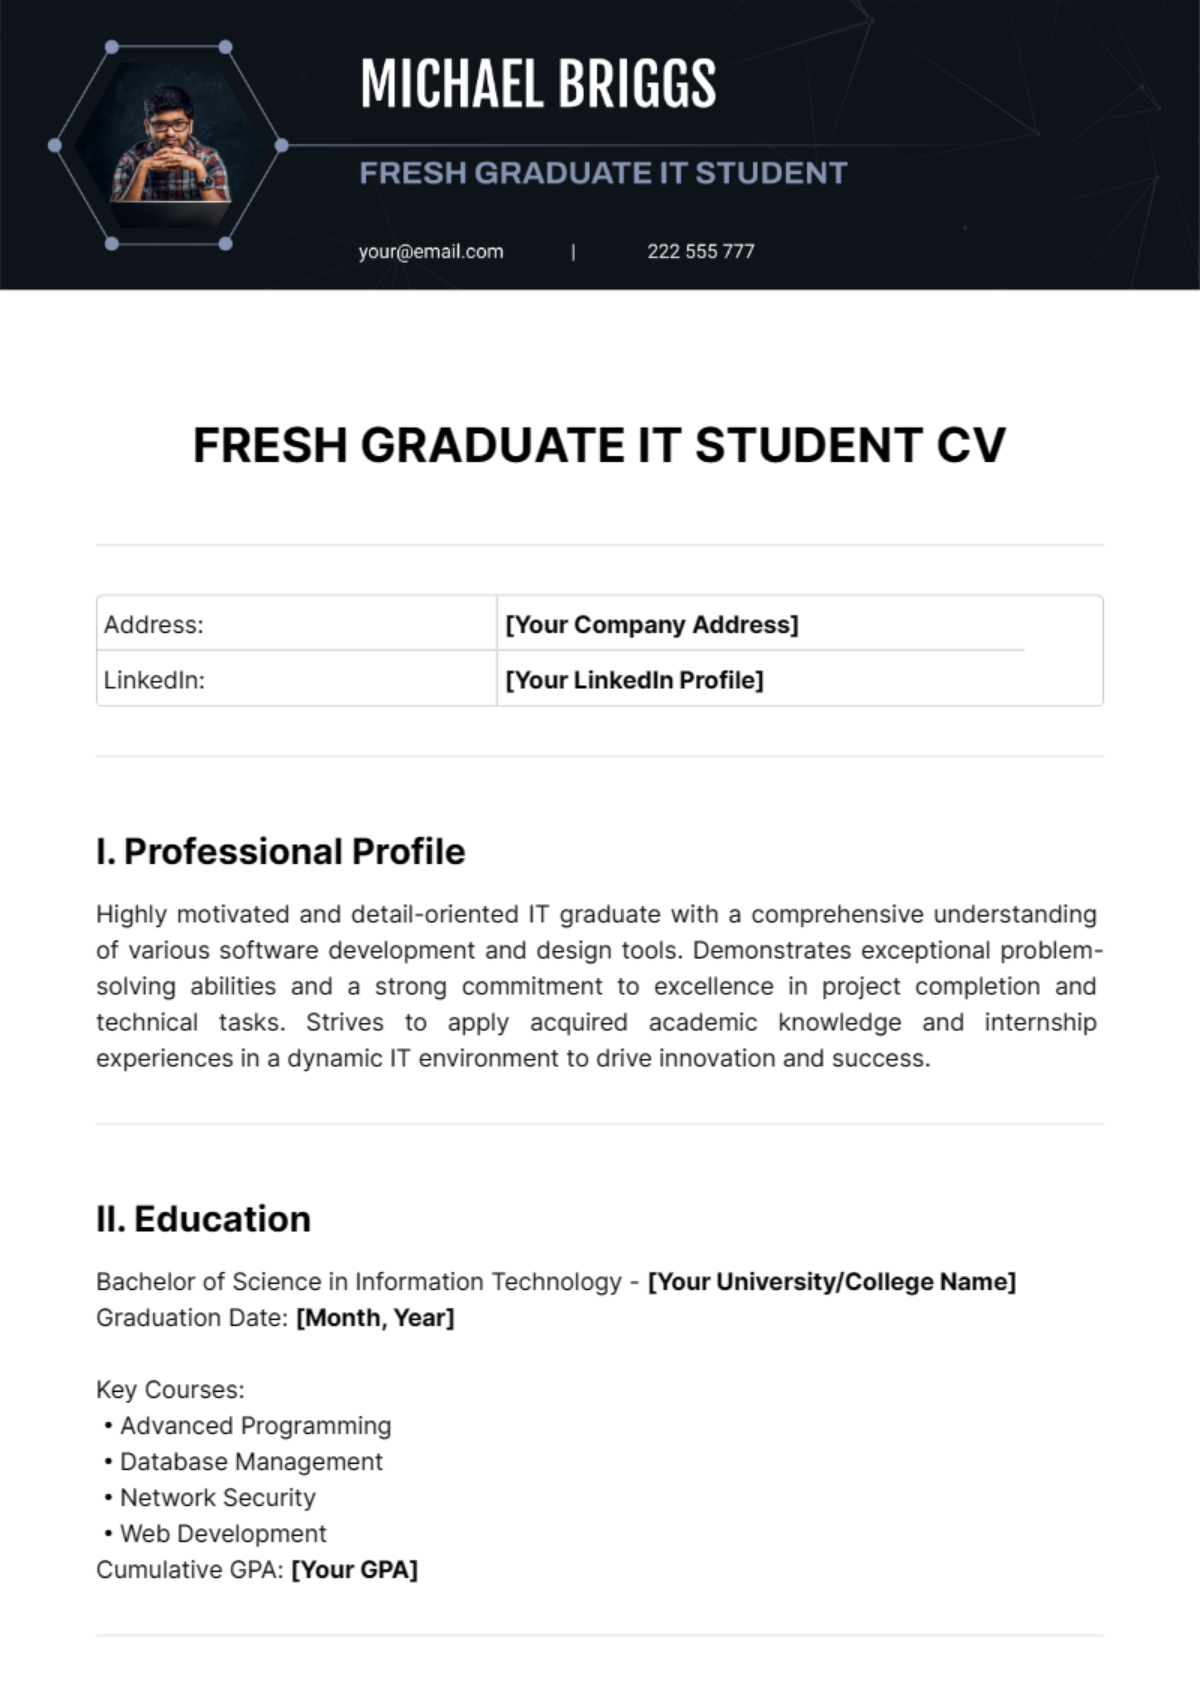 Free Fresh Graduate IT Student CV Template